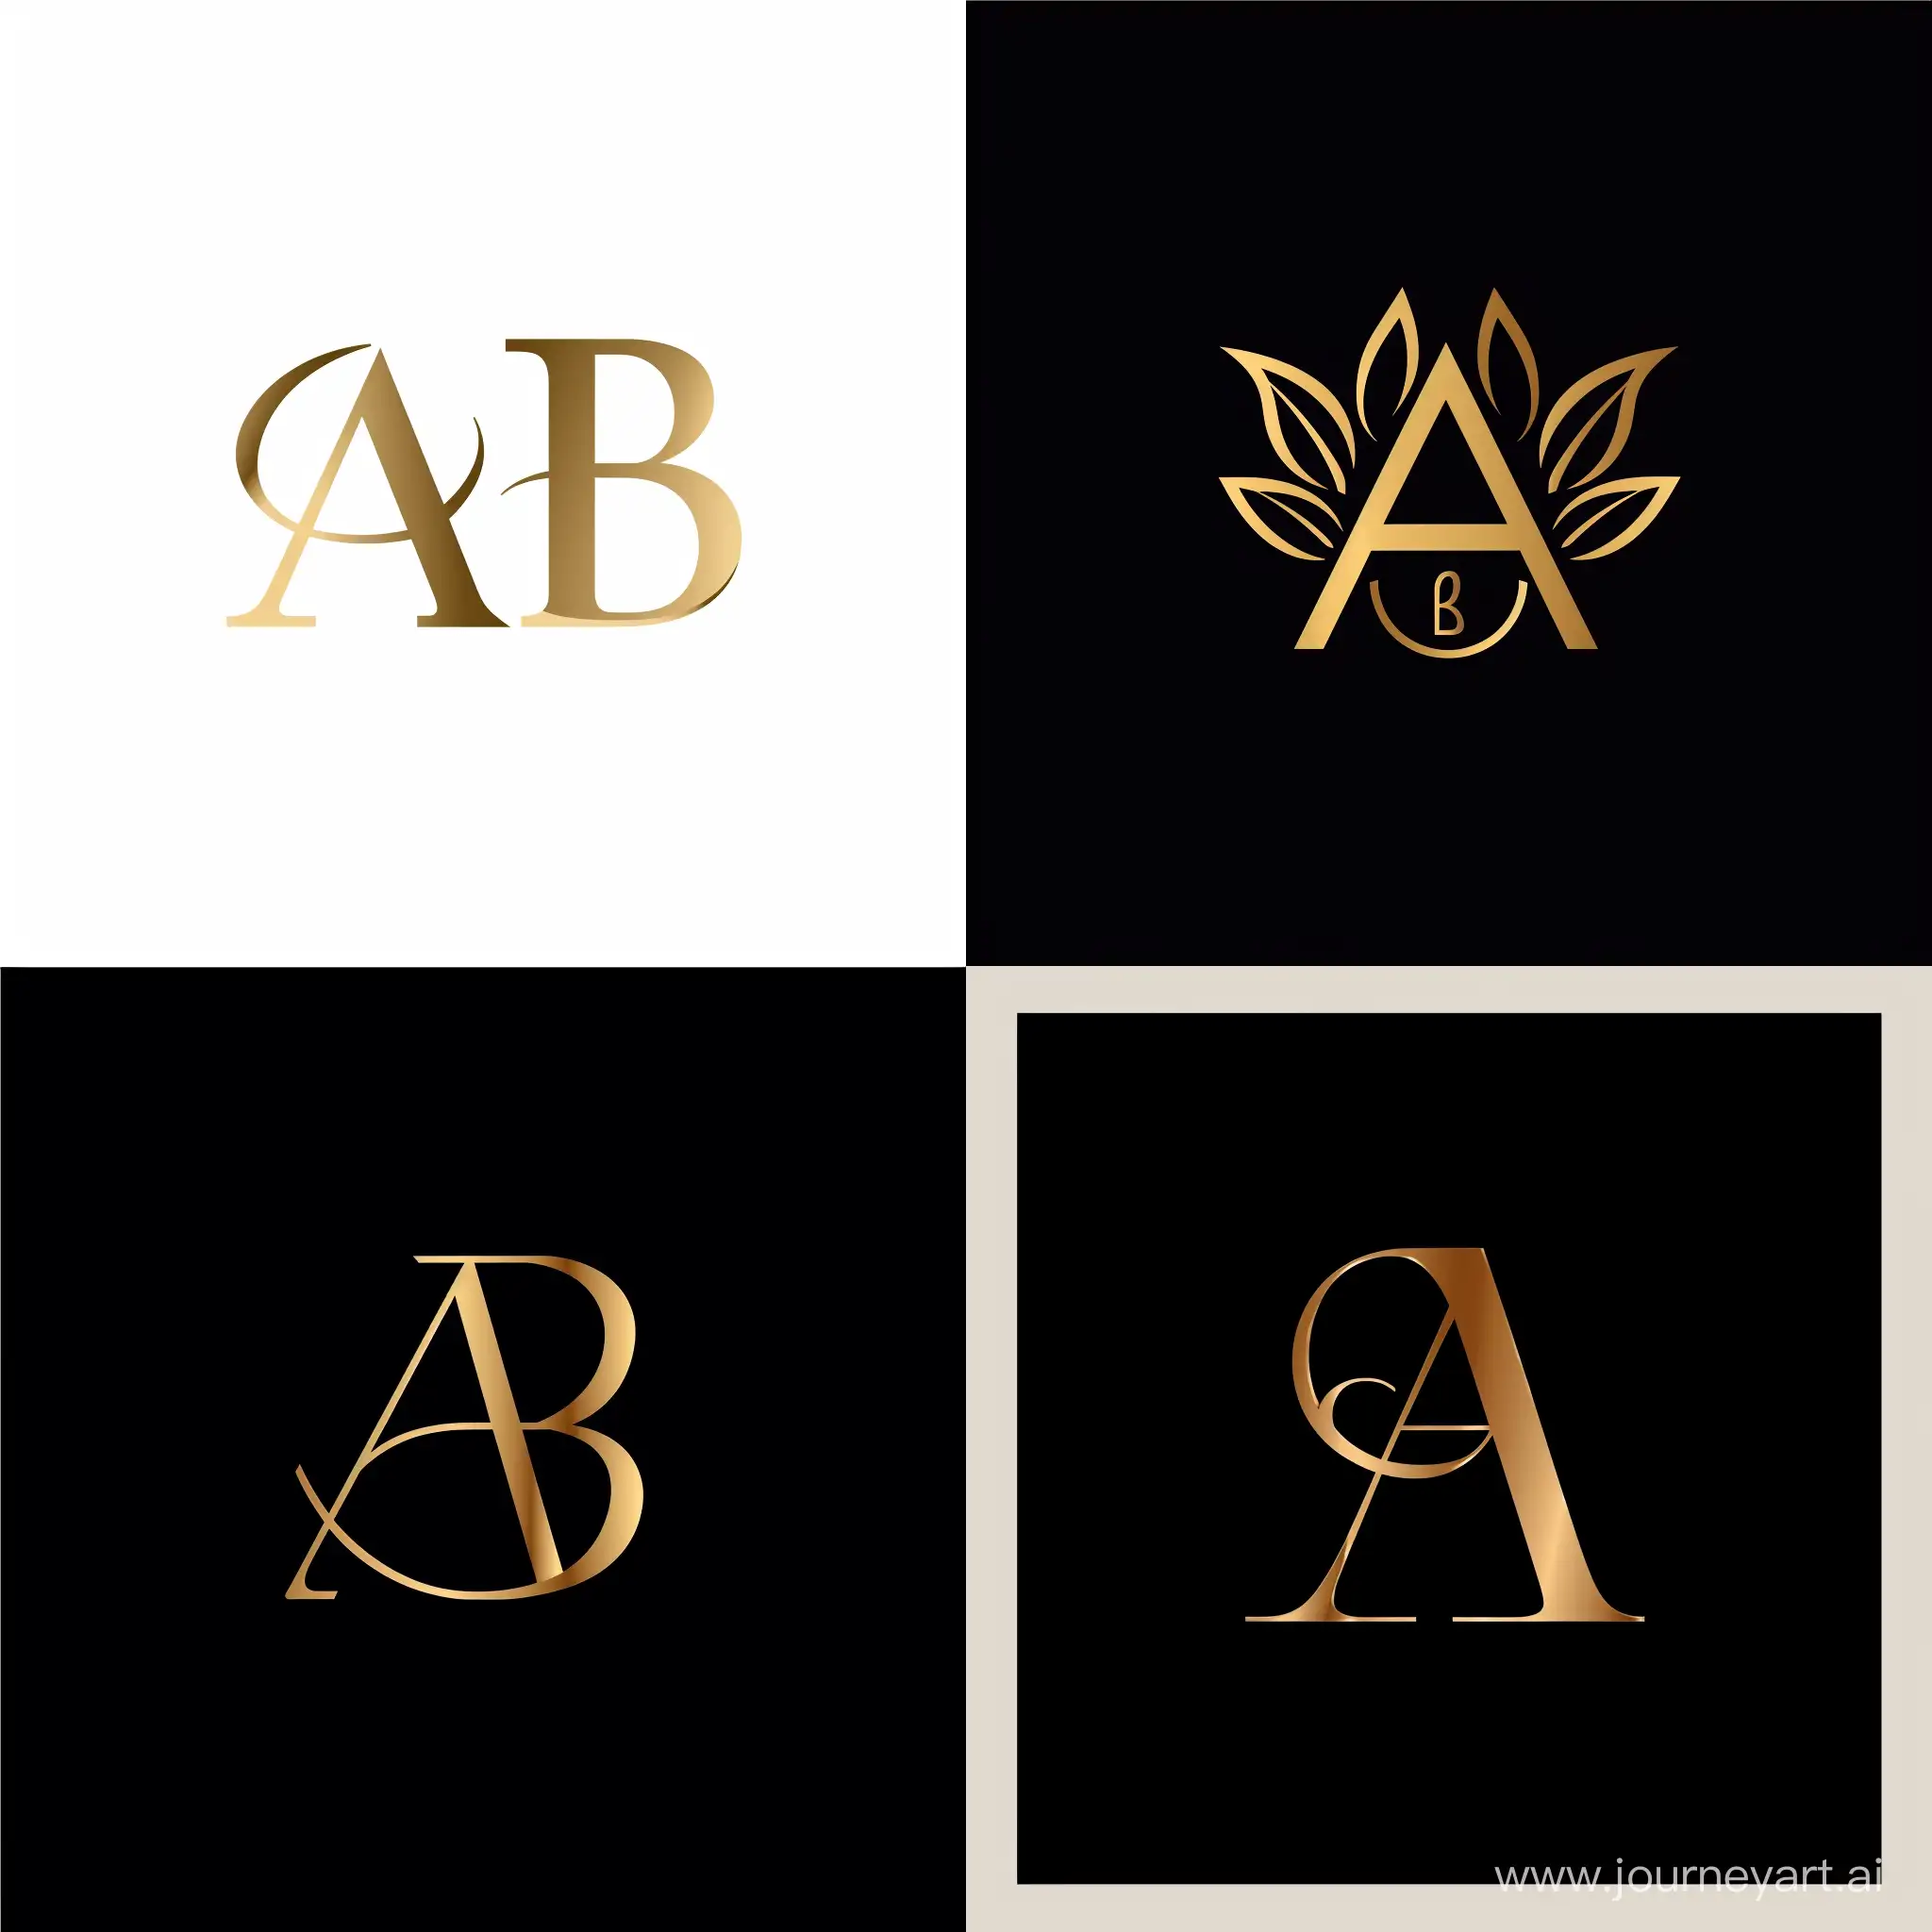 Professional-Masseur-Logo-Design-with-Elegant-AB-Letters